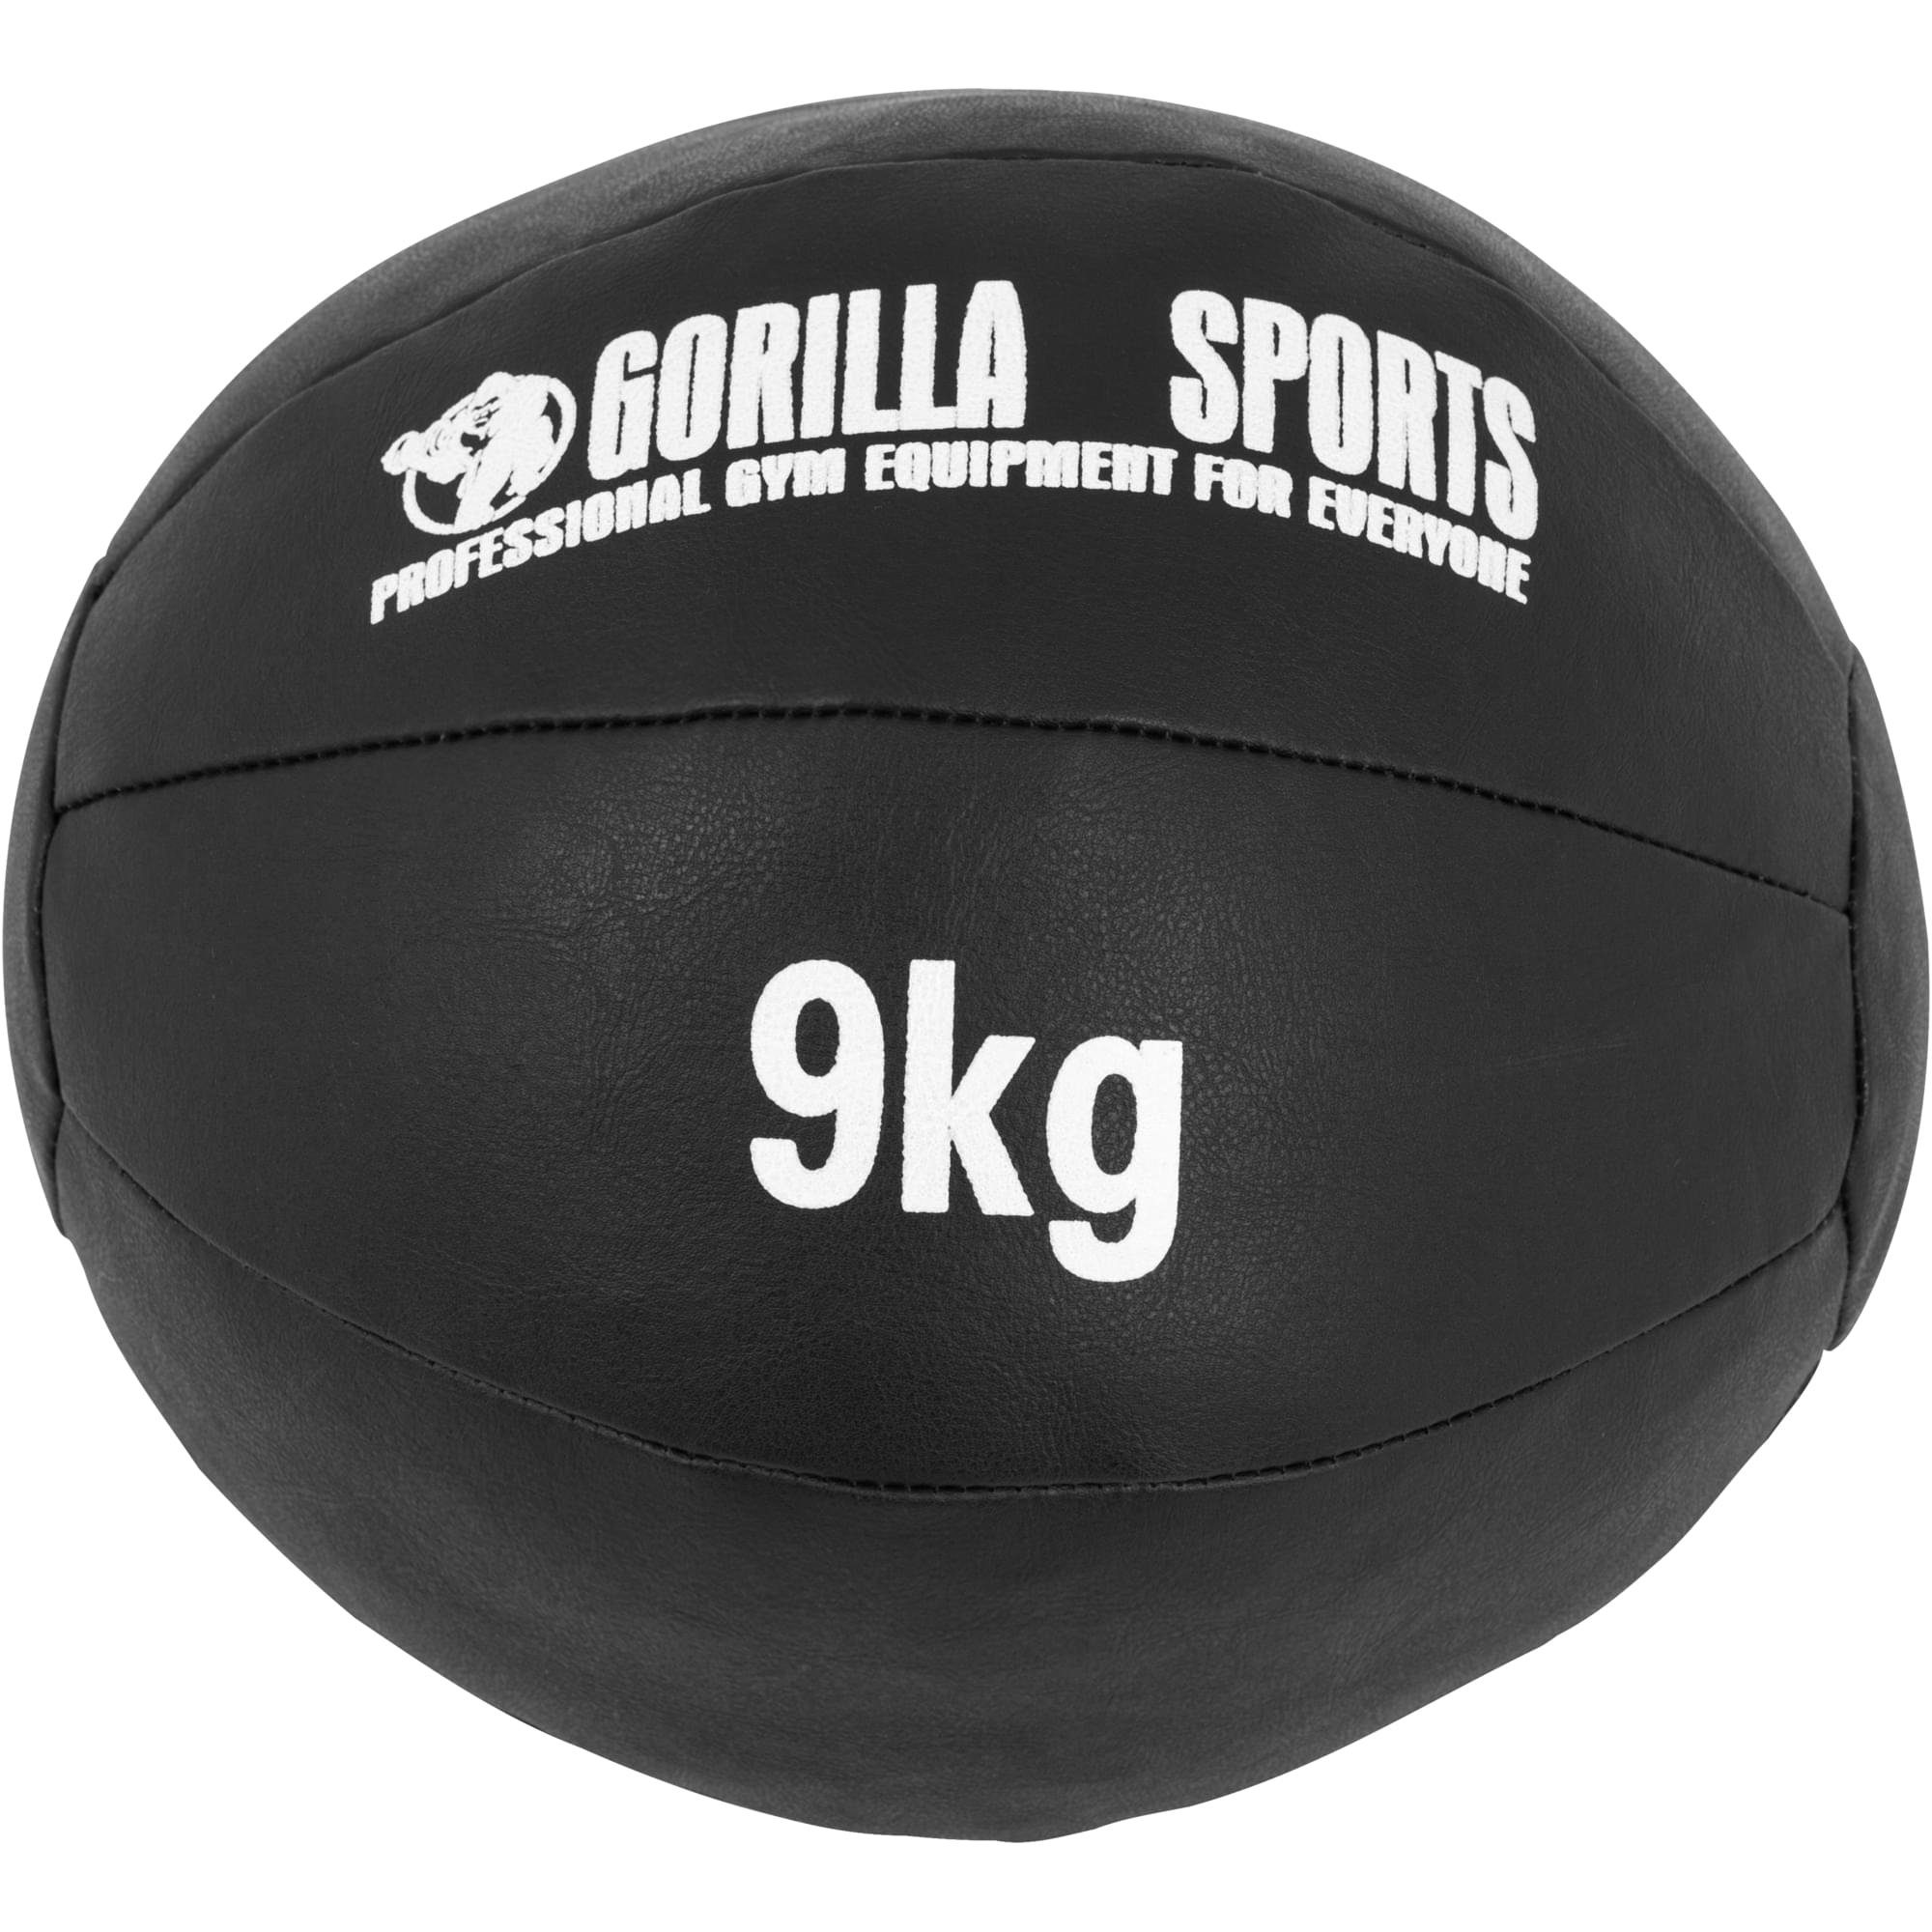 55 Medizinball Einzeln/Set, Set aus Trainingsball, Leder, 29cm, Gewichtsball Fitnessball, GORILLA SPORTS kg